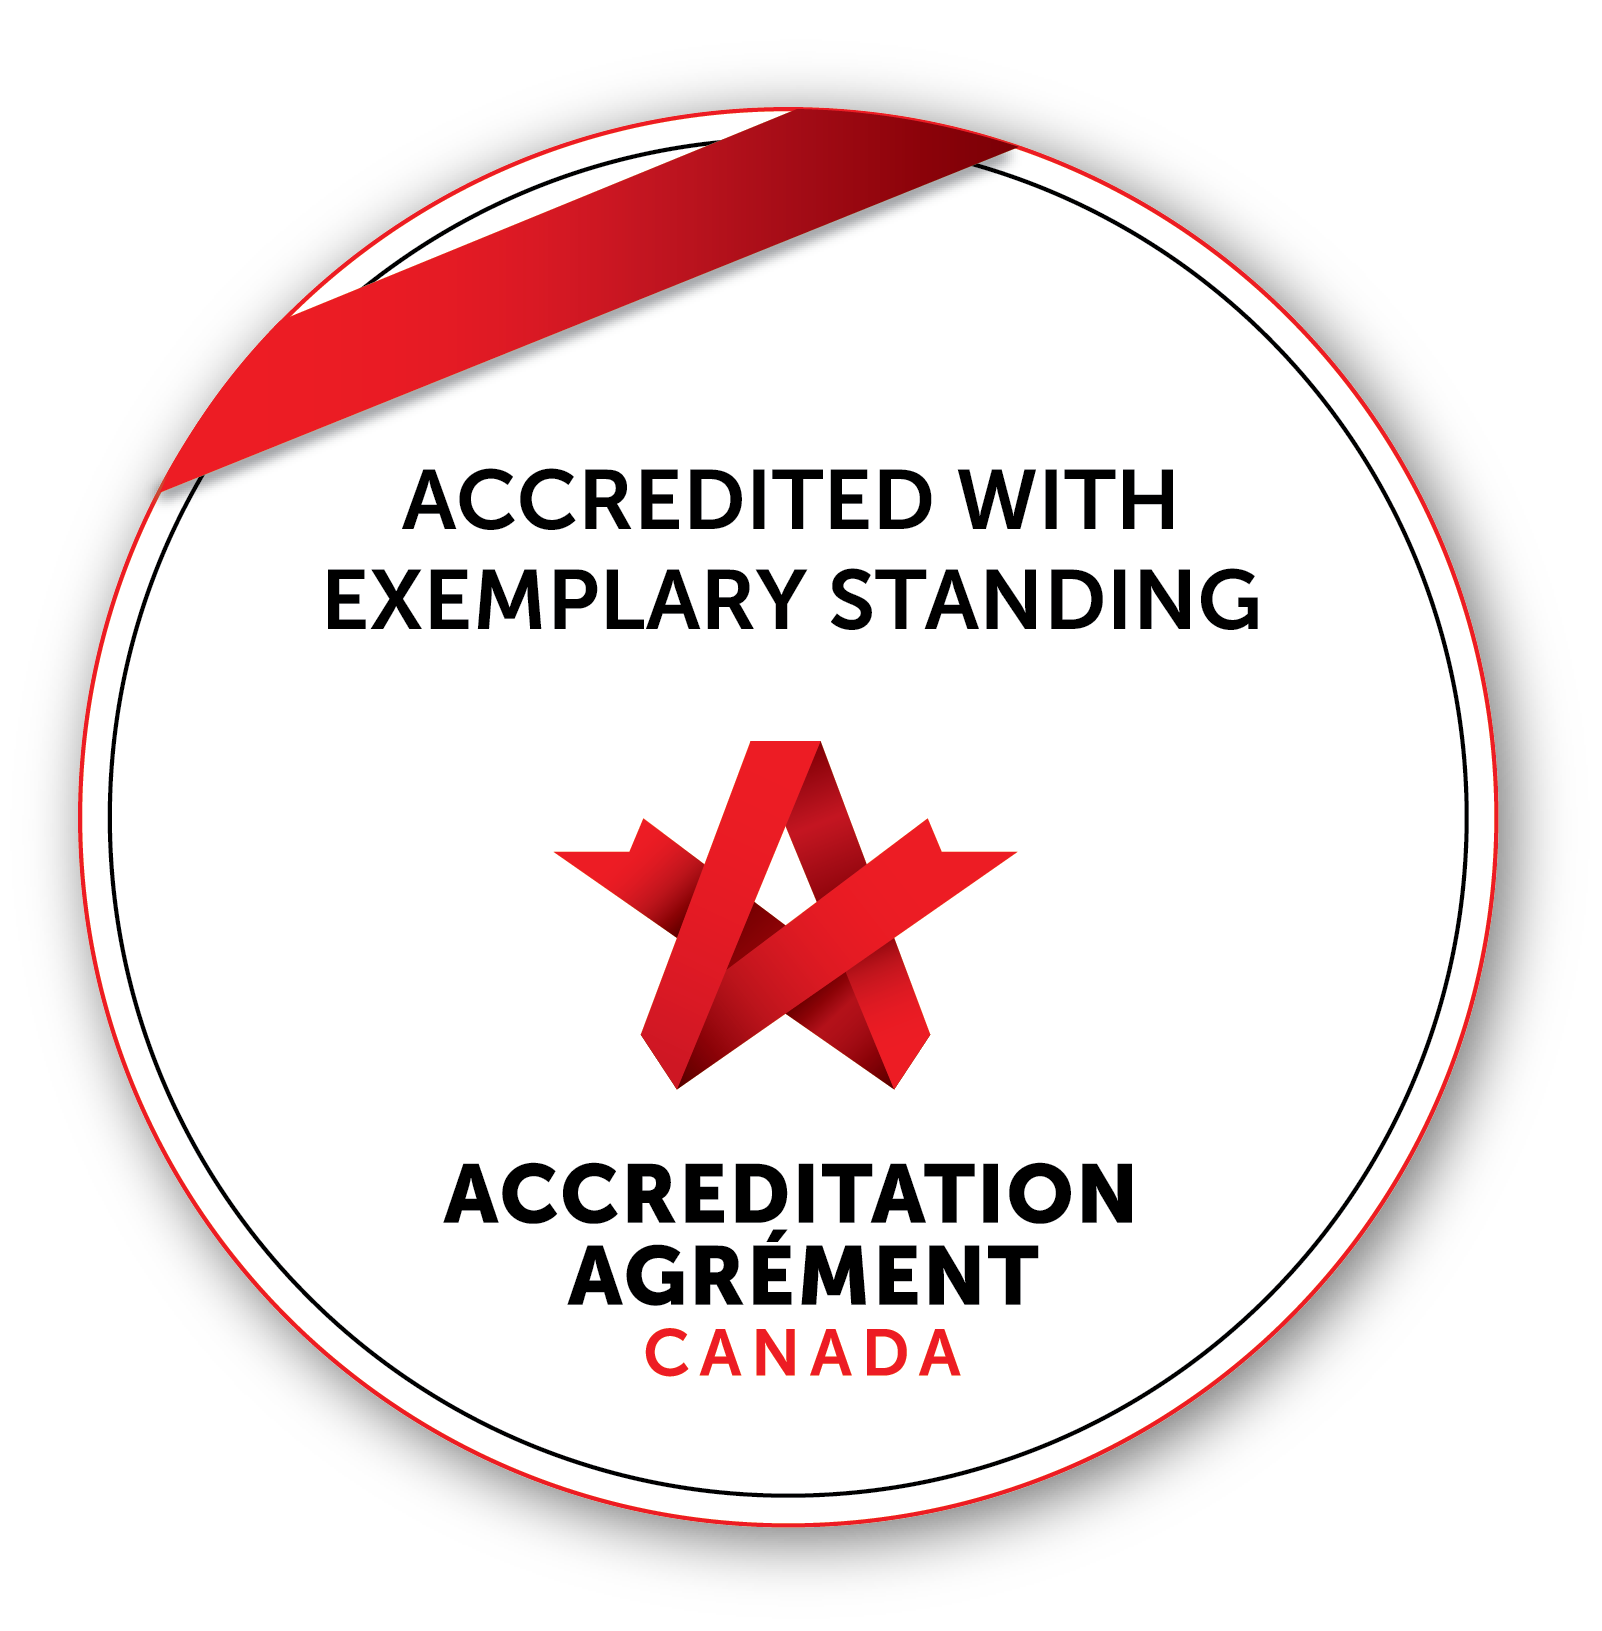 Accreditation Agreement Canada